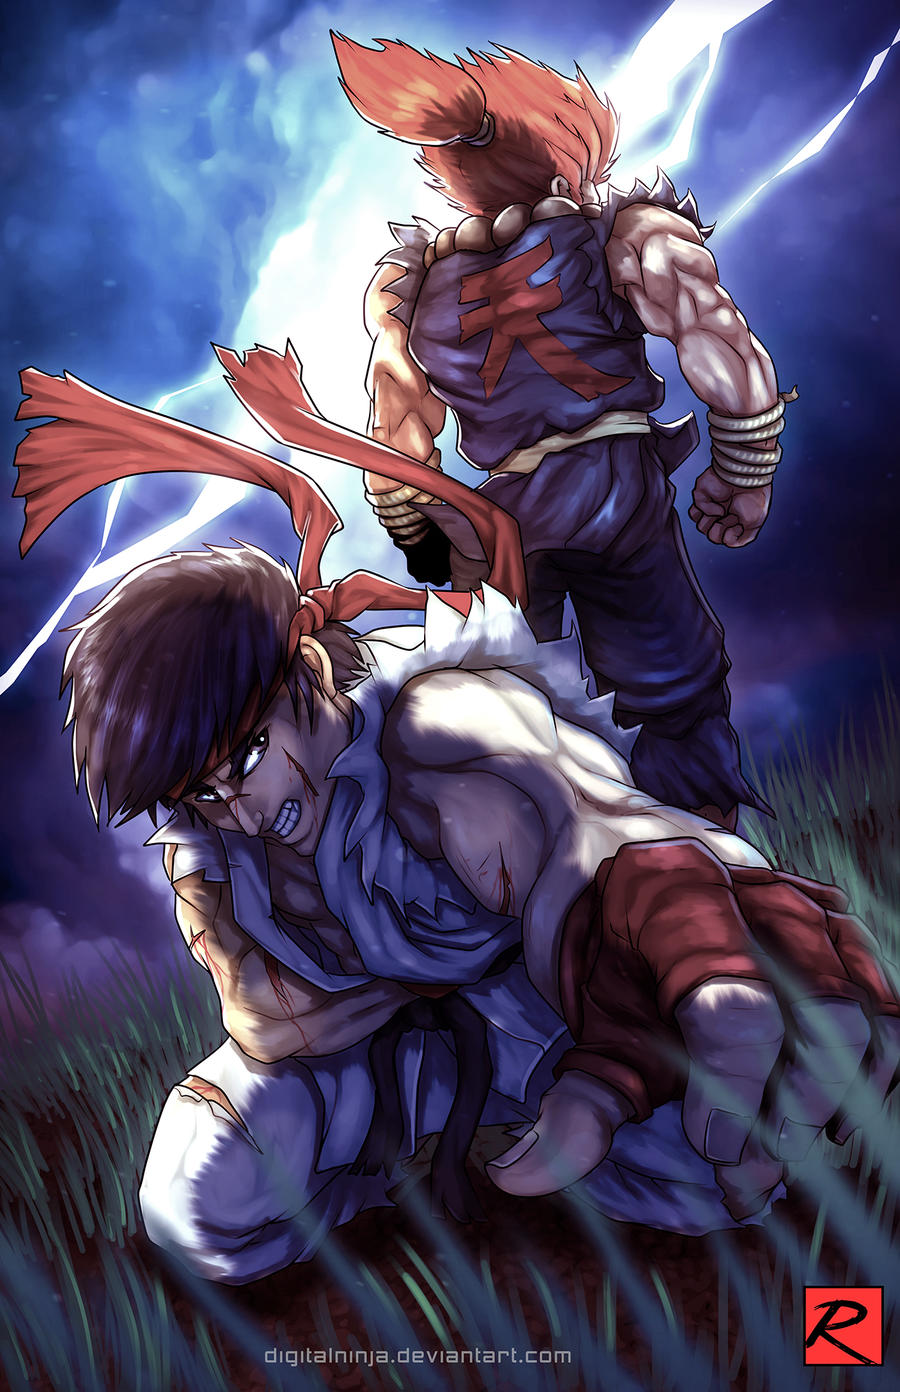 Epic street fighter battle between ryu and ken